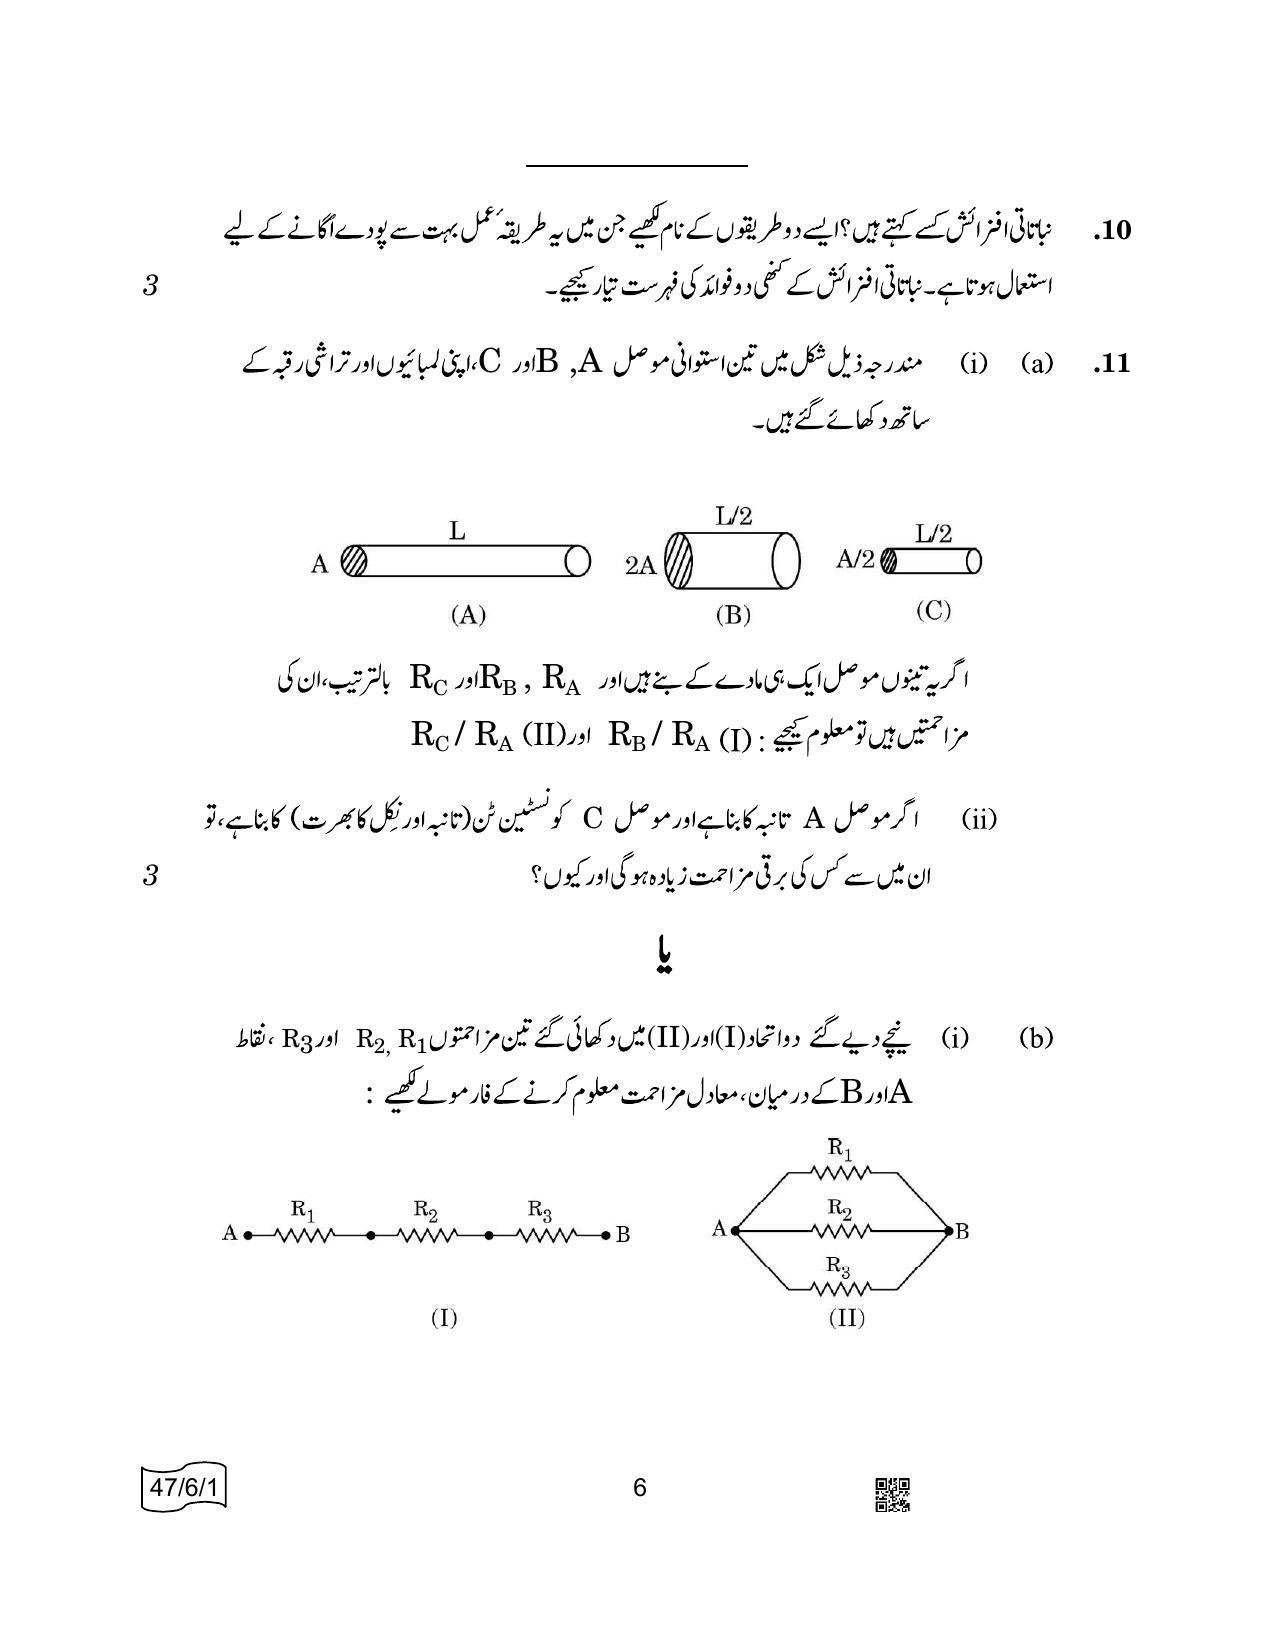 CBSE Class 10 47-6-1 SCIENCE Urdu 2022 Compartment Question Paper - Page 6